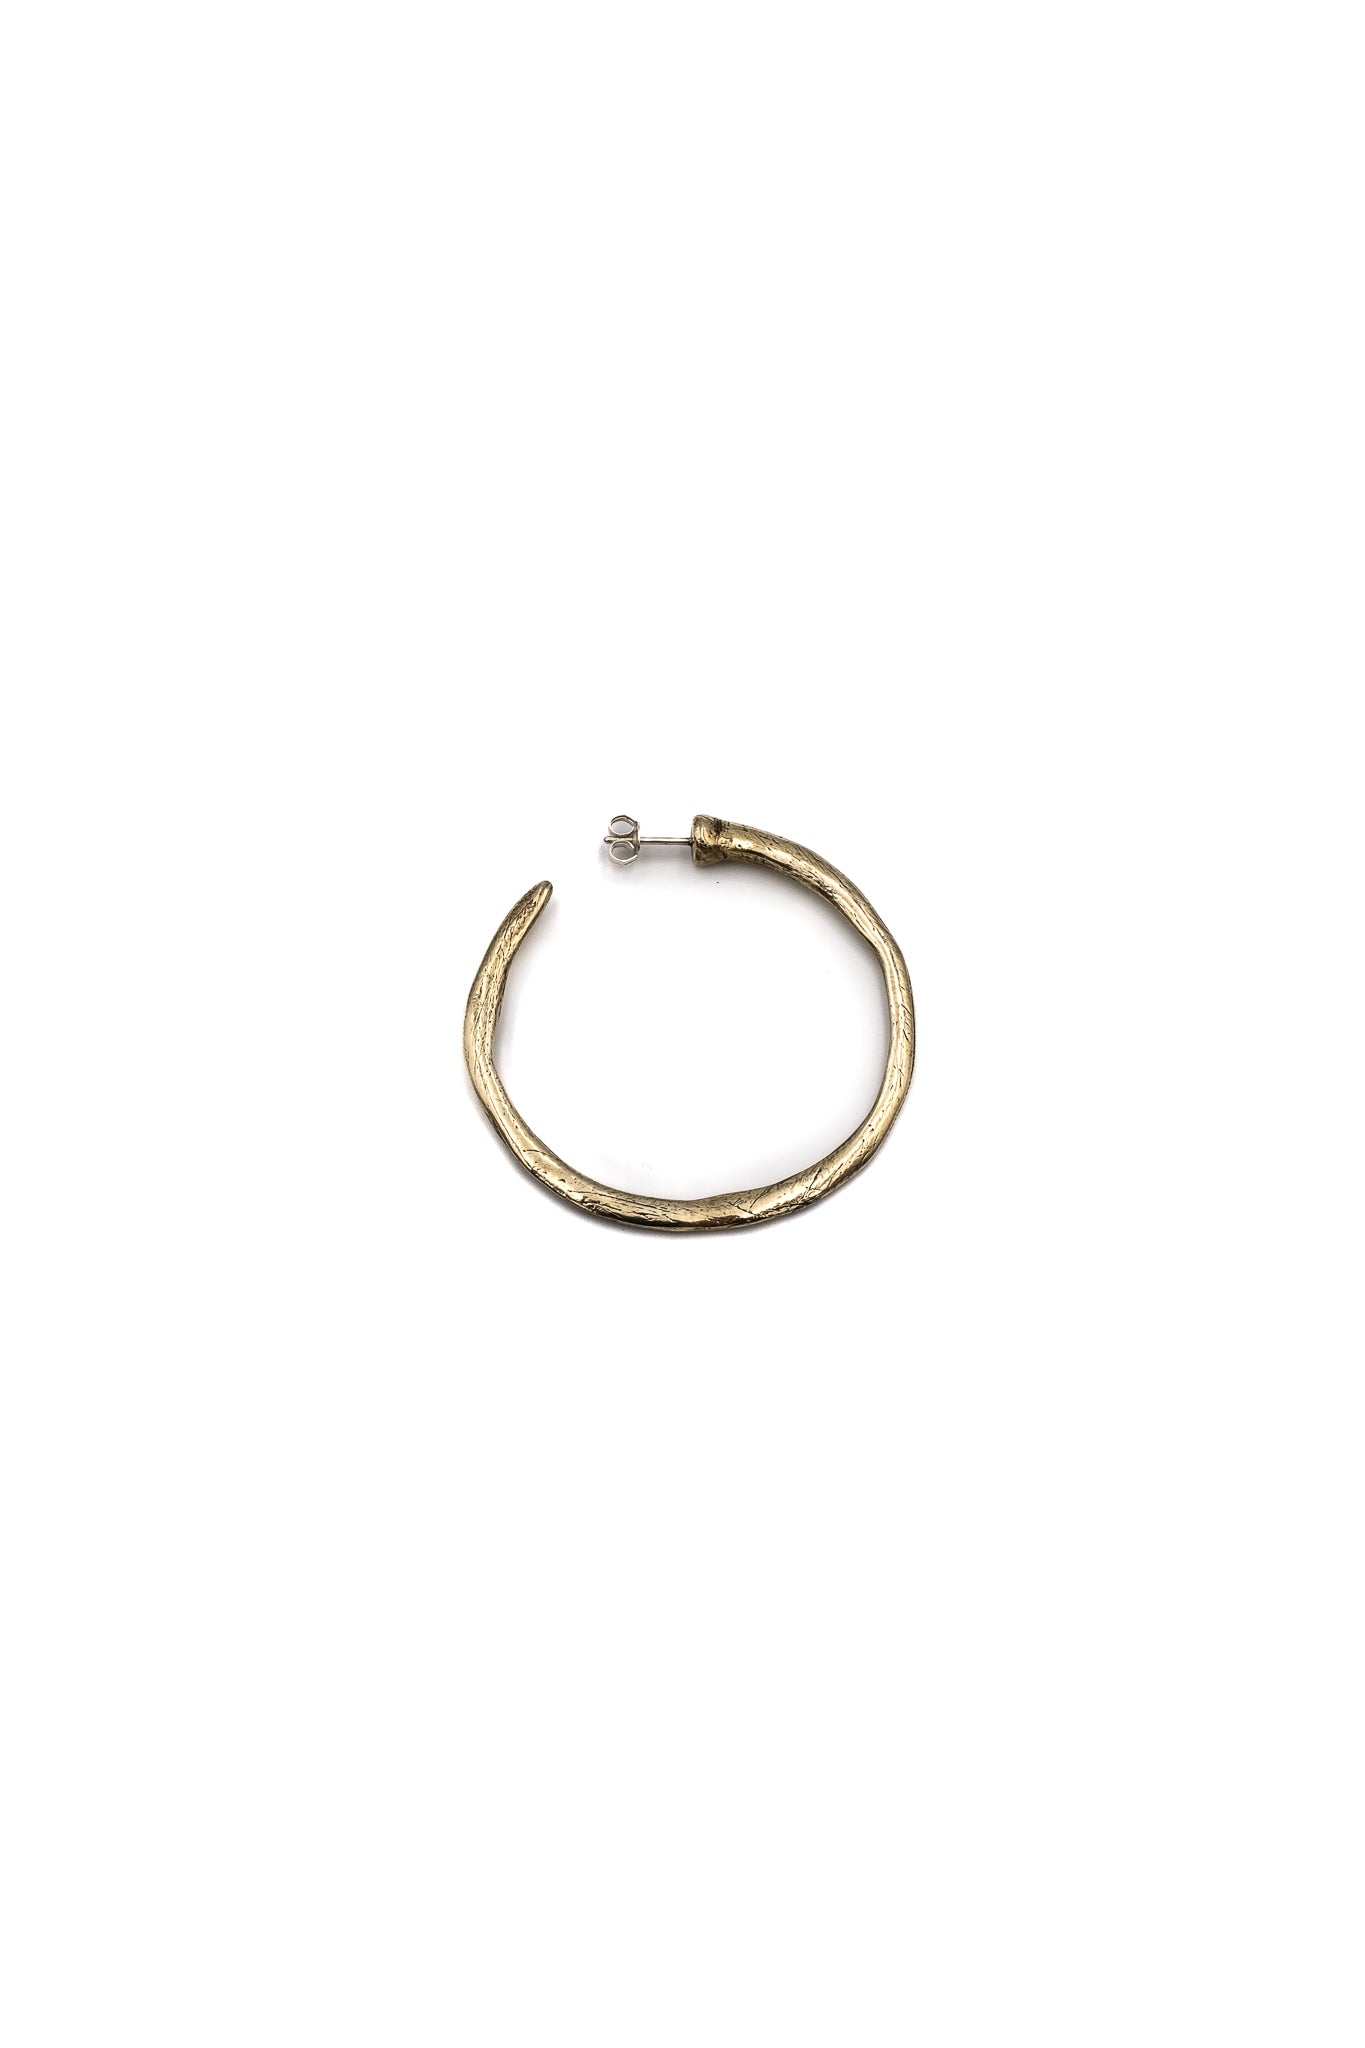 Nail Hoop Earrings in Brass